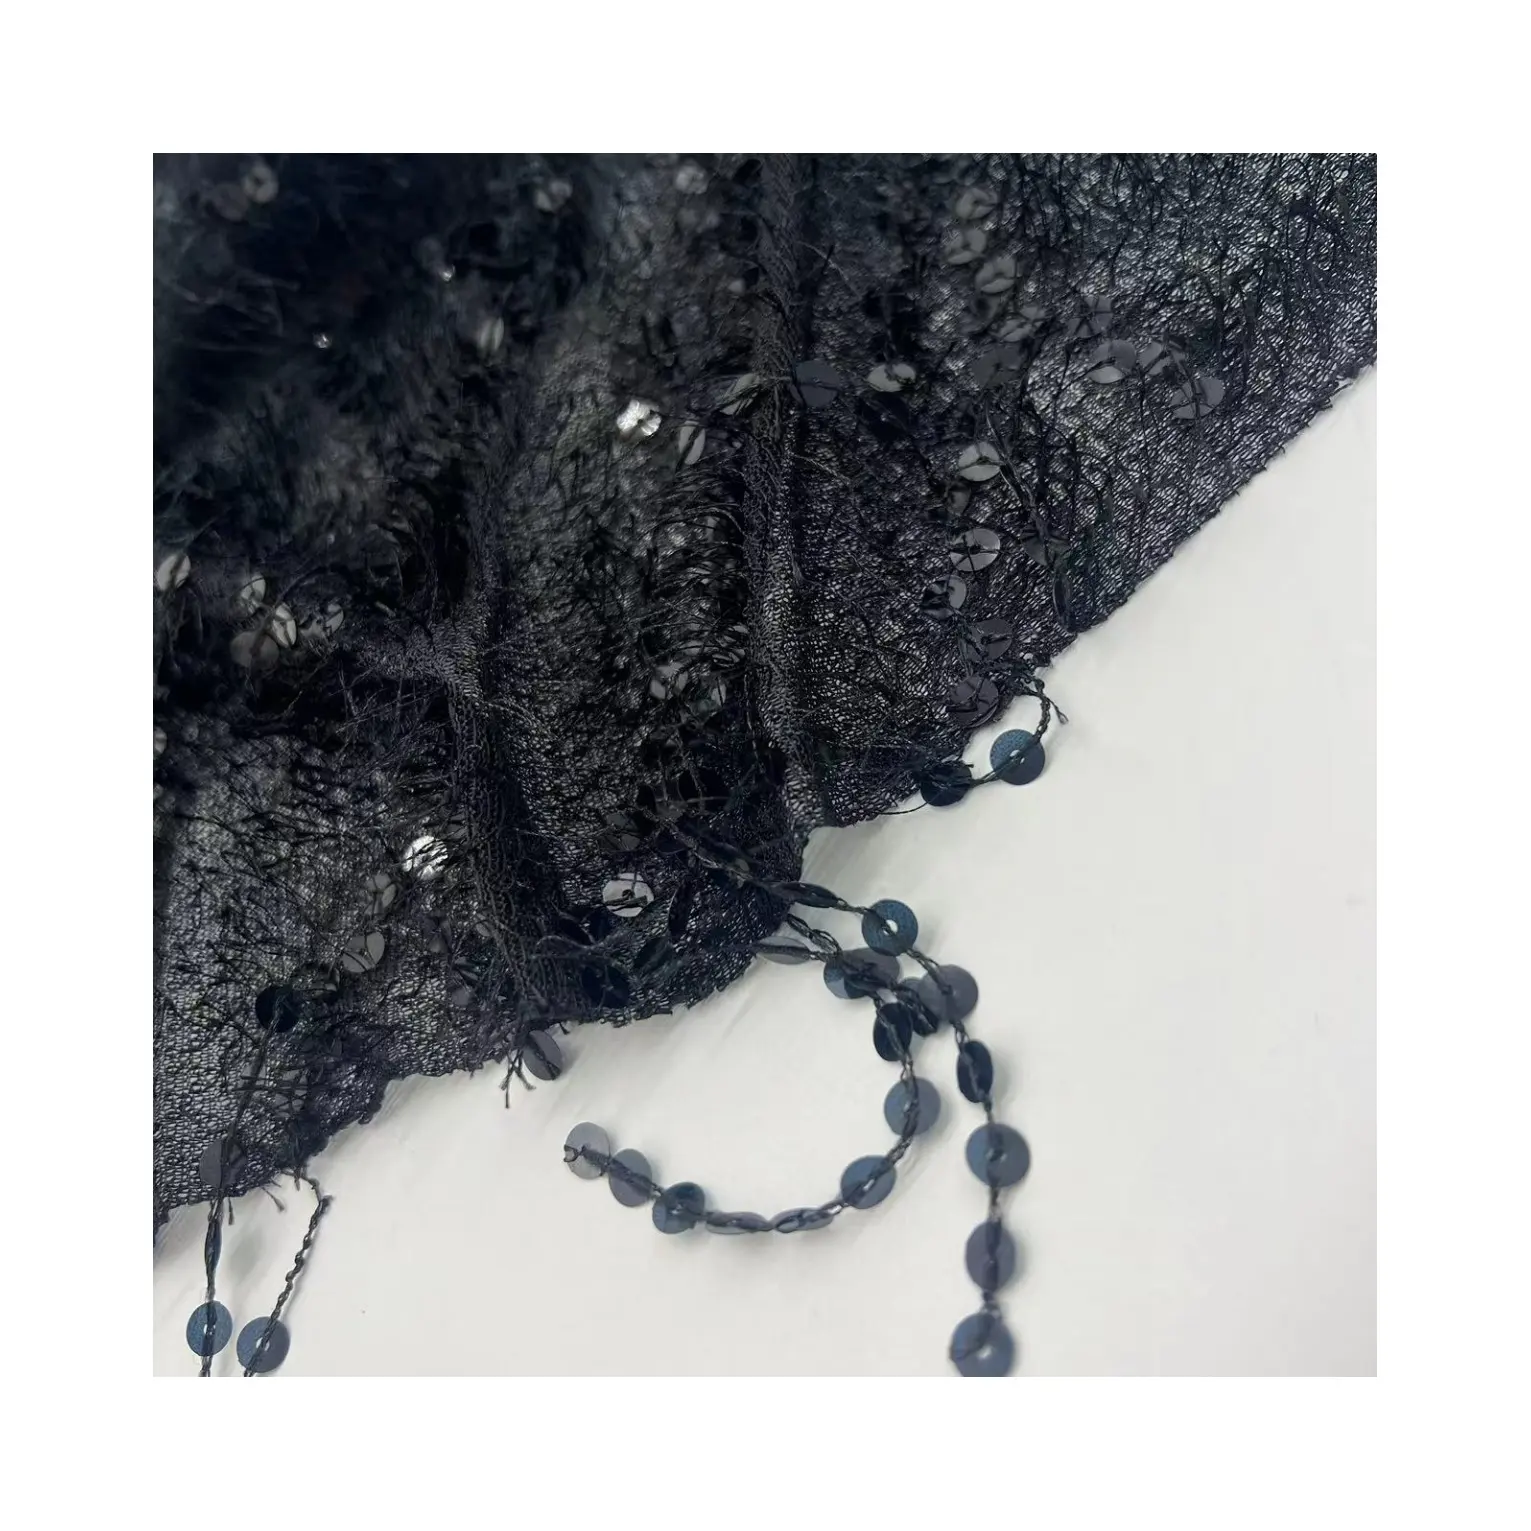 Tela de lentejuelas avanzada diseño de terciopelo con aguja de pino telas de poliéster de color negro clásico para ropa